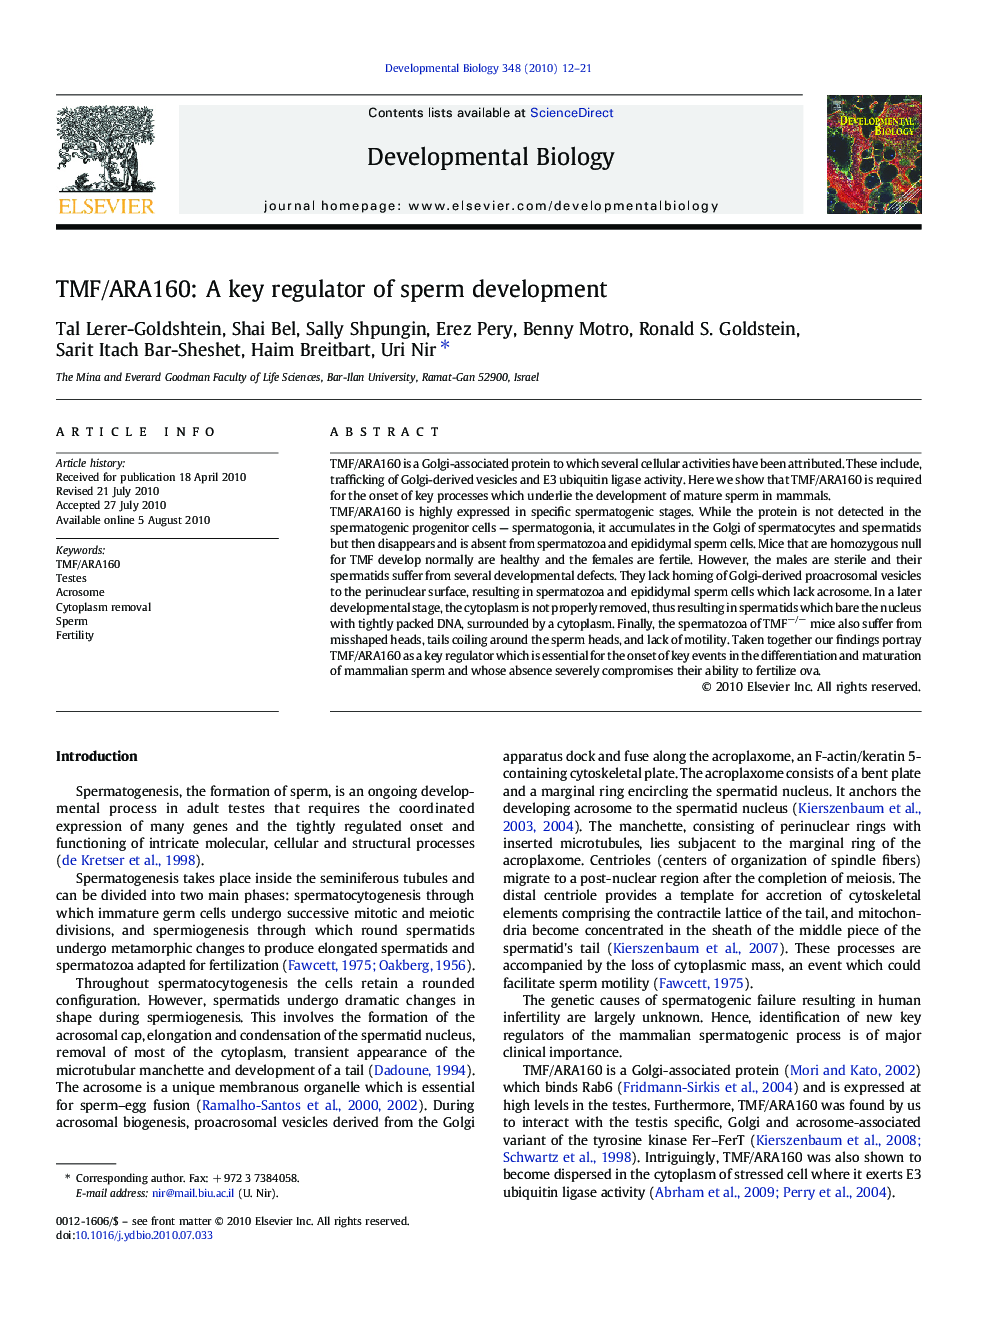 TMF/ARA160: A key regulator of sperm development